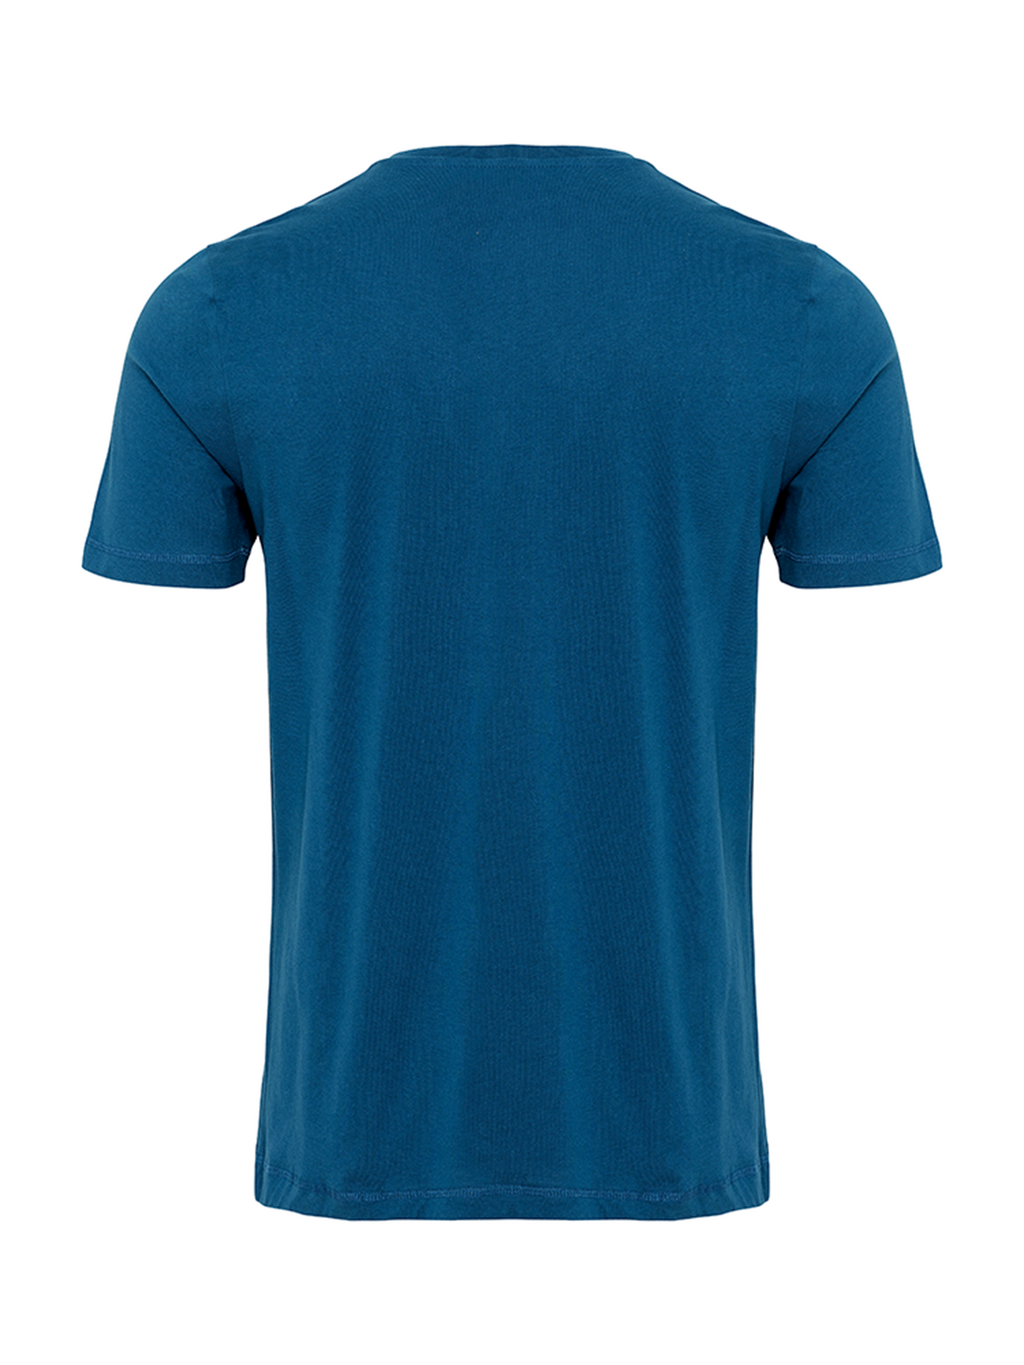 Økologisk Basic T-shirt - Petroleumsblått